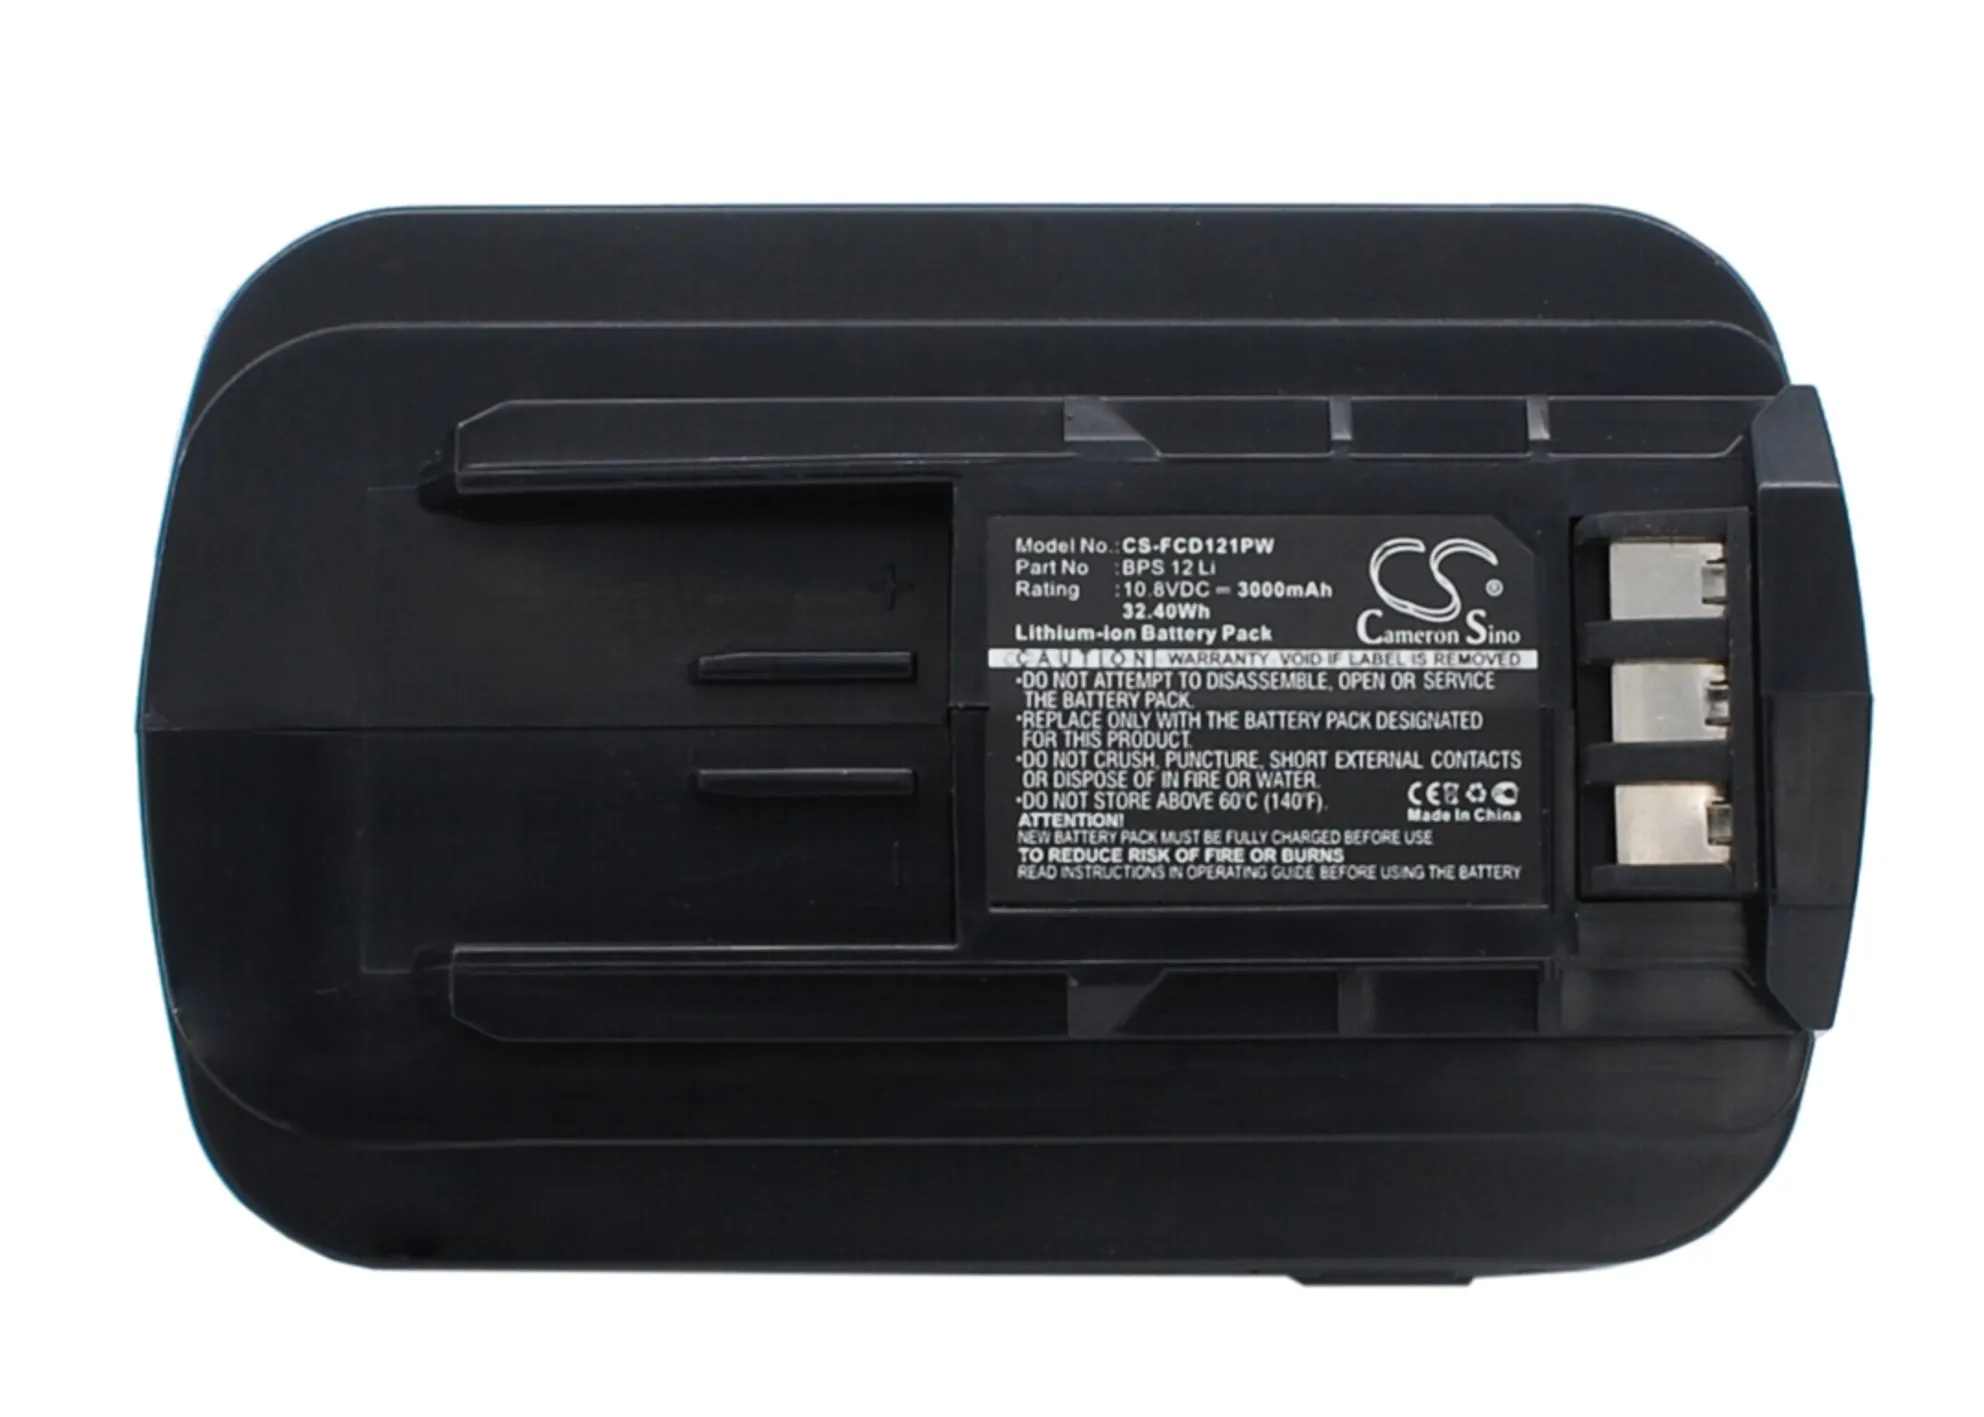 

Cameron Sino 494831 495479 BPS 12 Li Battery for Festool T12+3 Cordless Drill 3000mAh